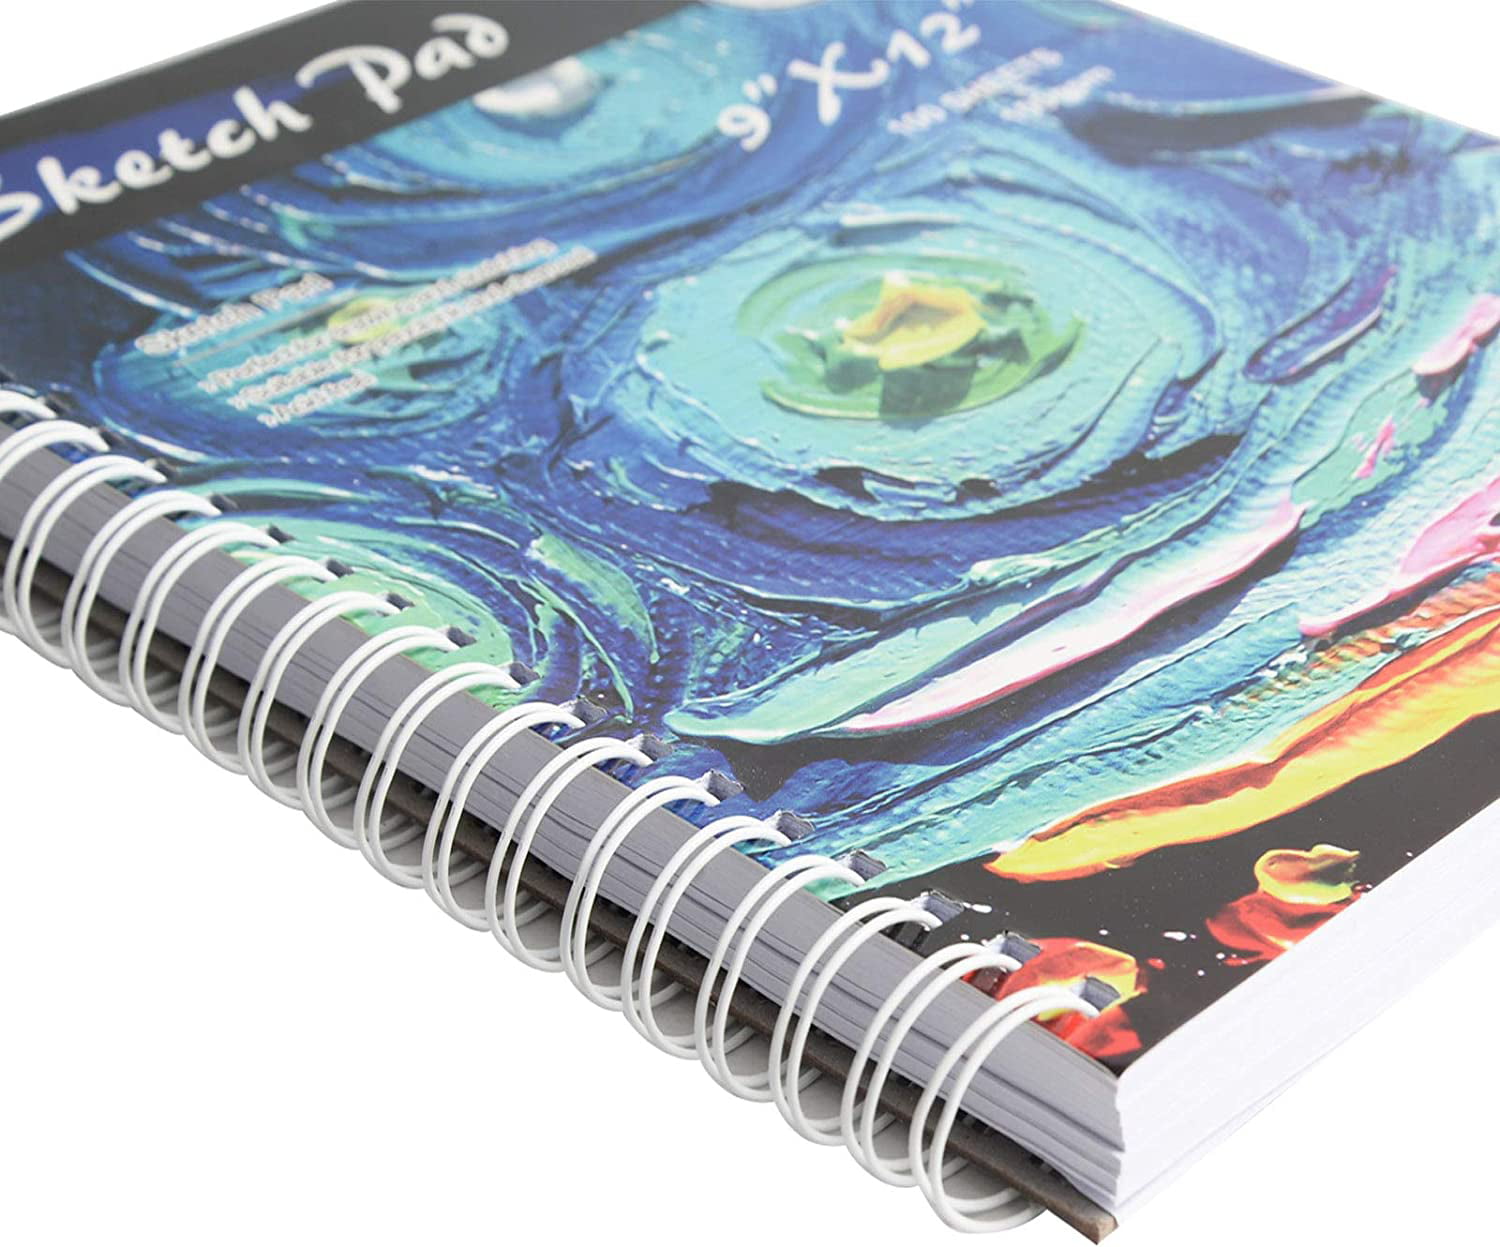 ankkol sketch book 9x12 inch, artist sketch pad, 100 sheets (68lb/100gsm)  spiral bound sketchbook, acid-free drawing paper pad, art